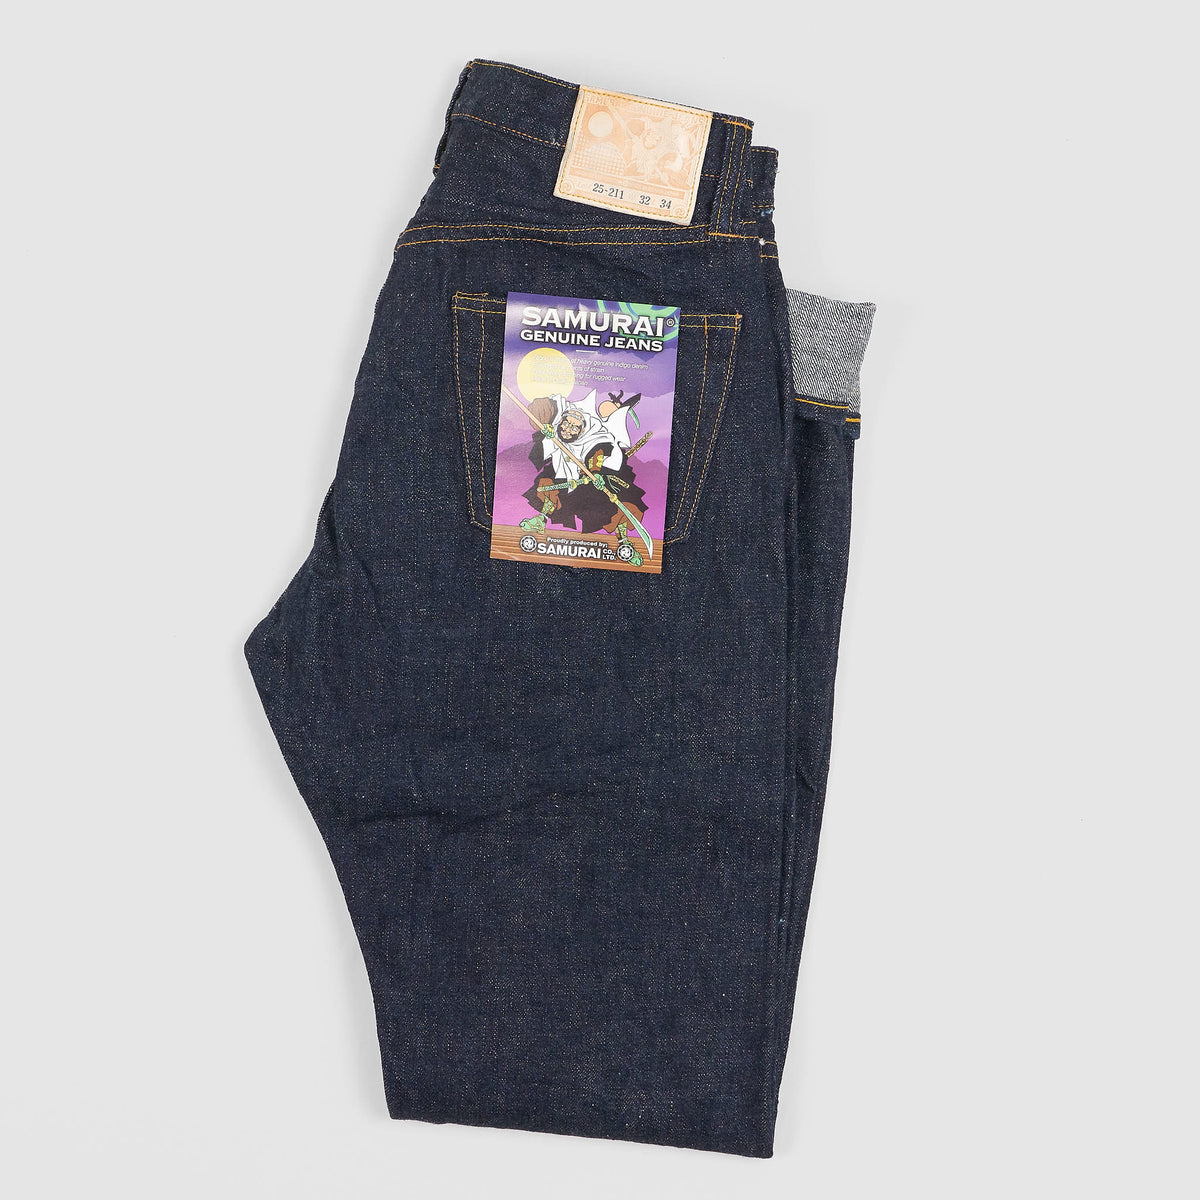 Samurai Jeans 17oz Slim Tapered Selvage Denim Jeans